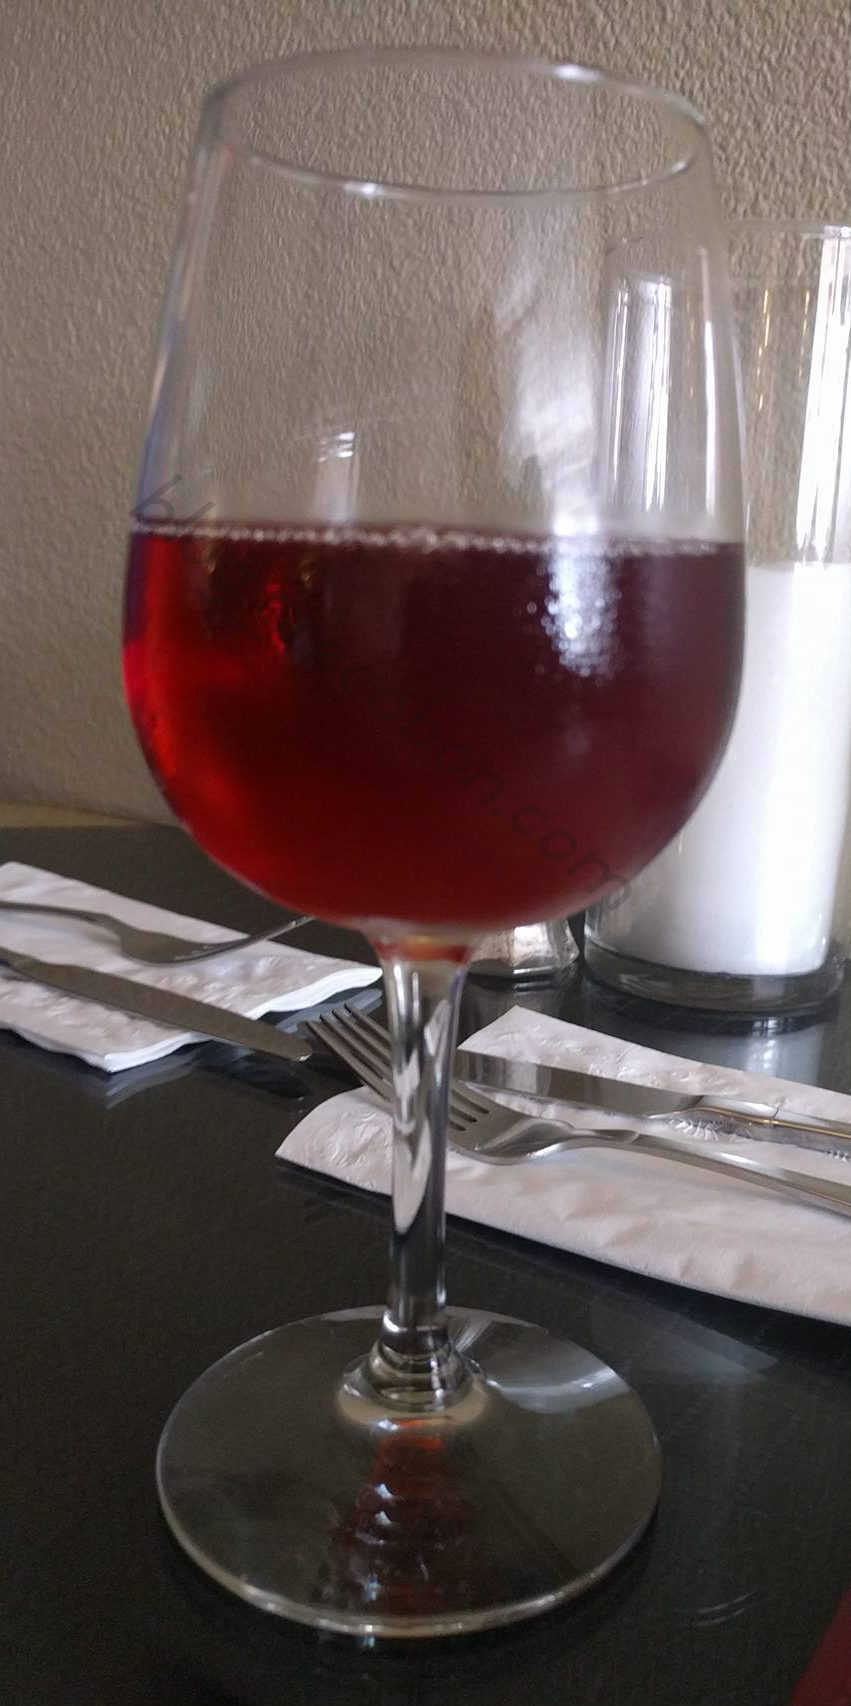 Pangaea Restaurant and Wine Bar, Temecula, California #wine #greekfood #temecula #foodblog